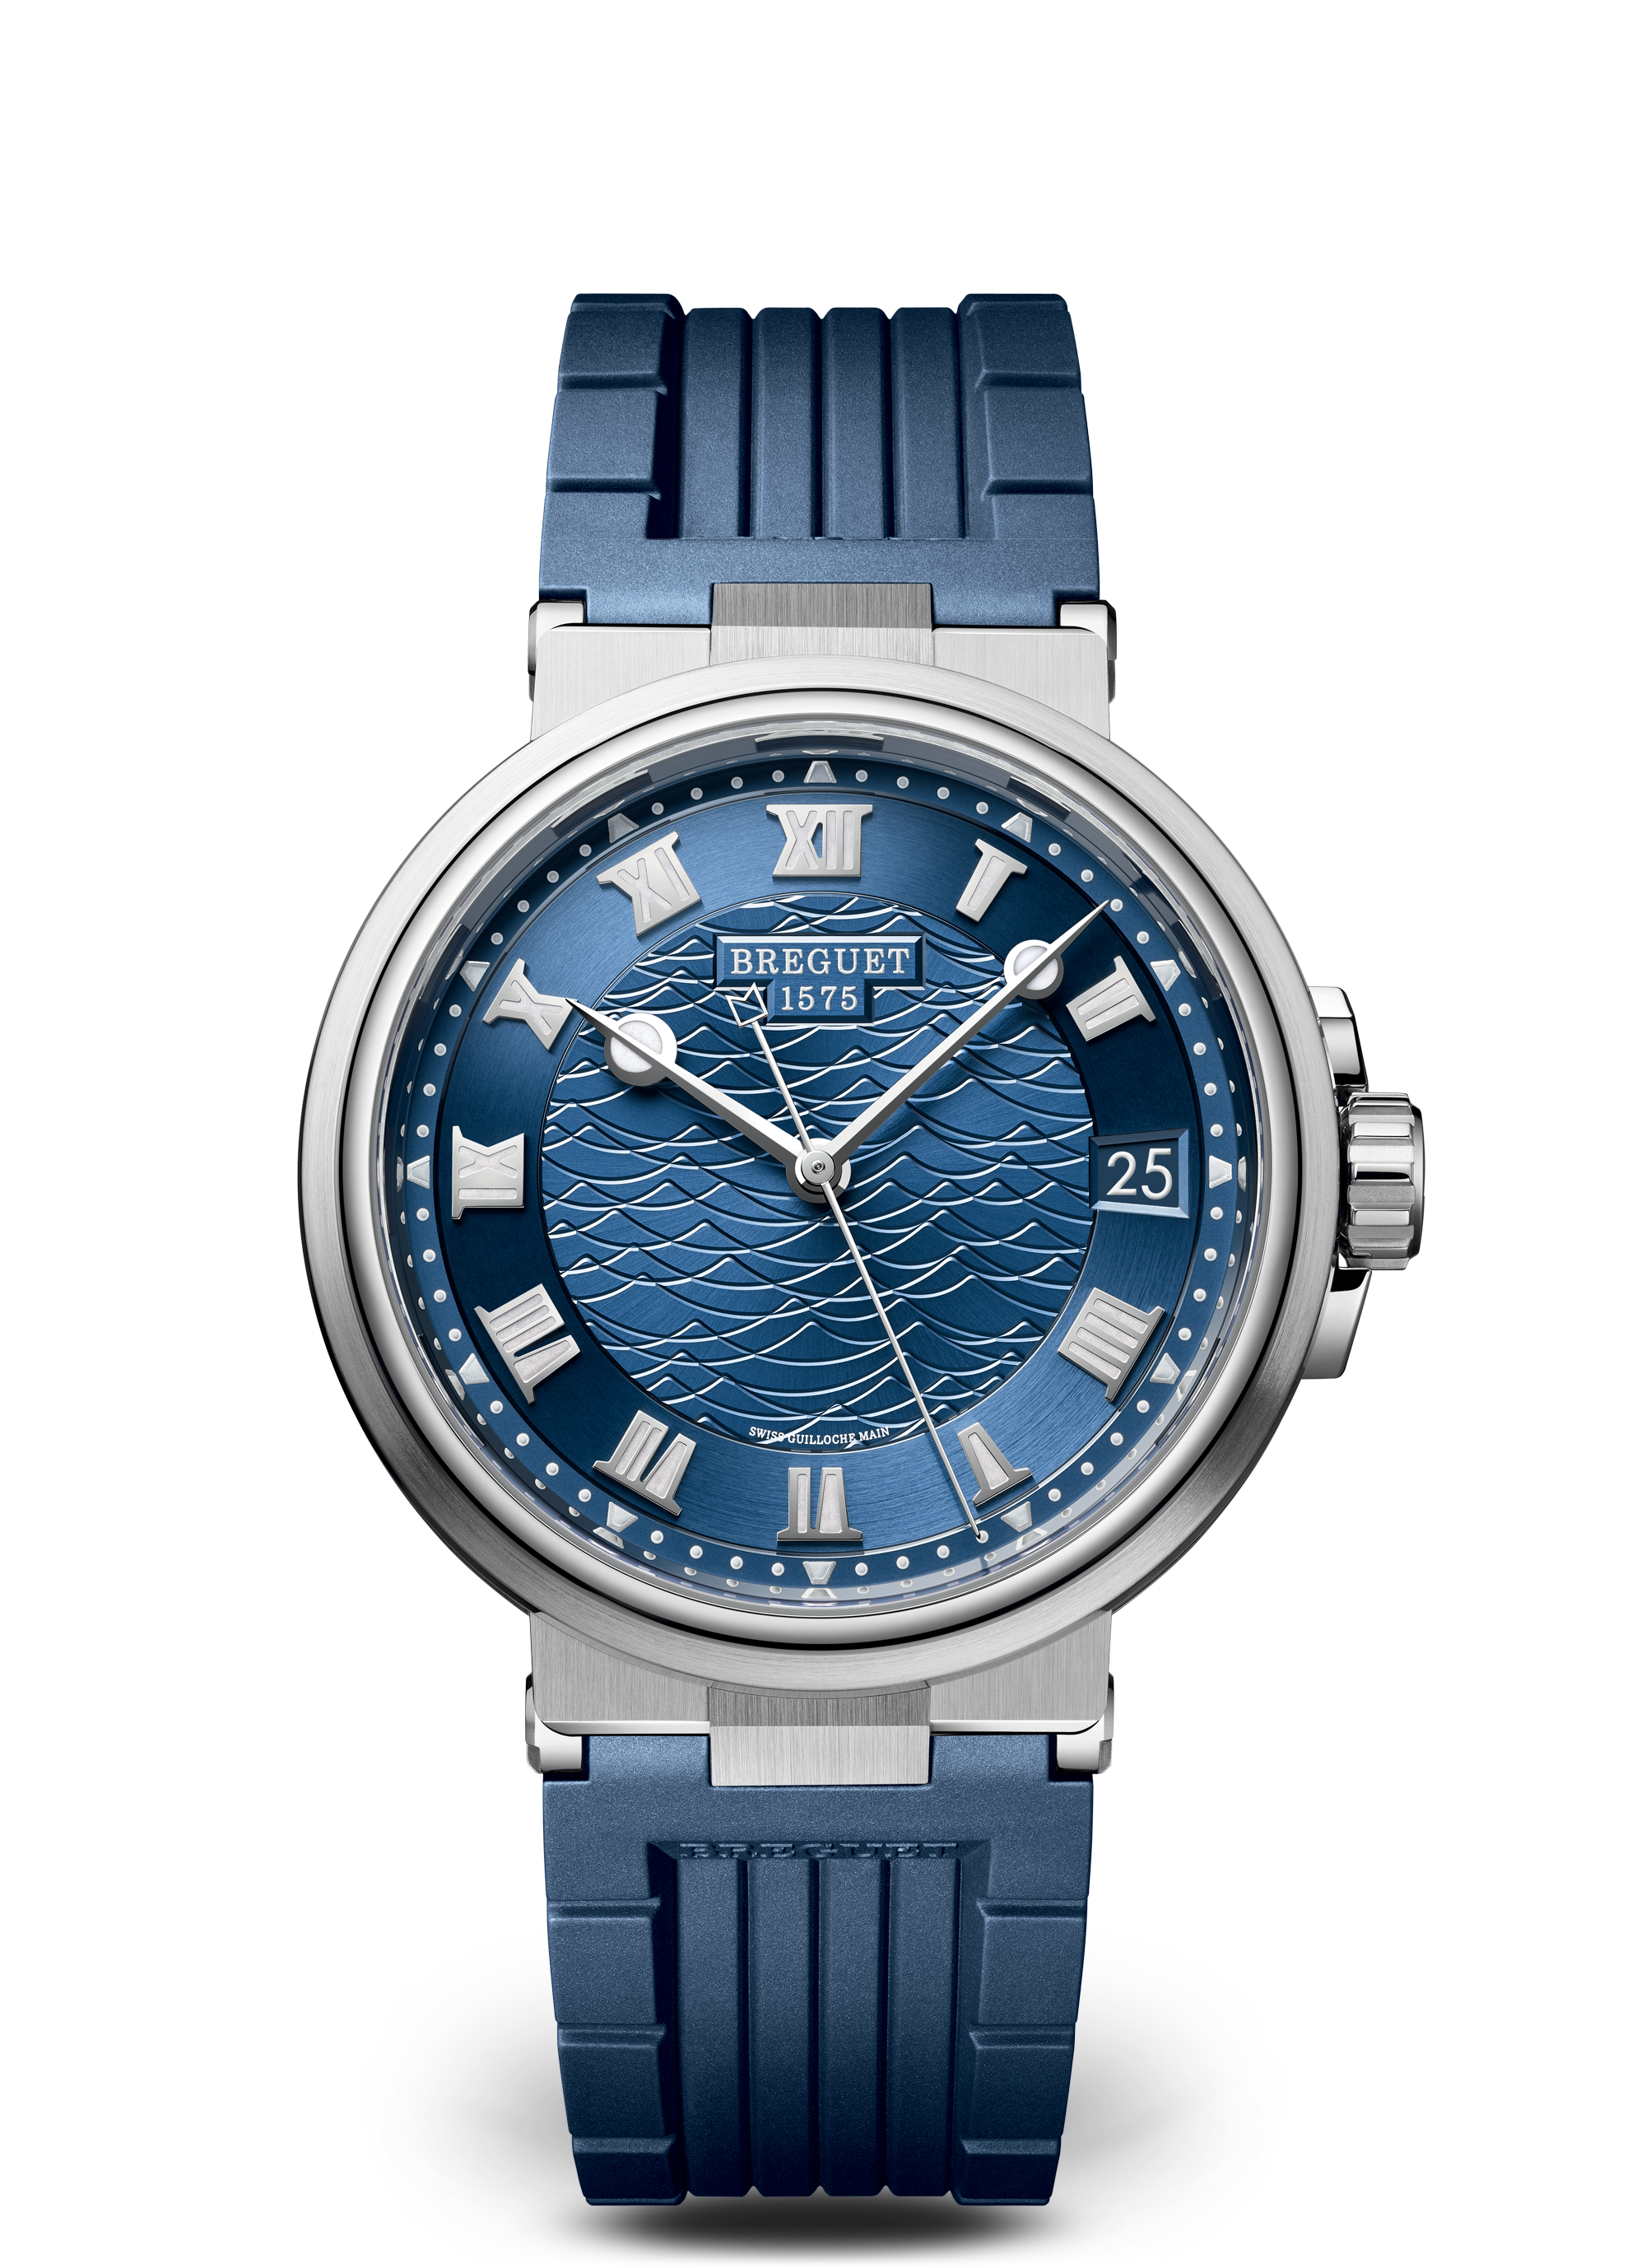 Replica Patek Philippe Diamond Watch